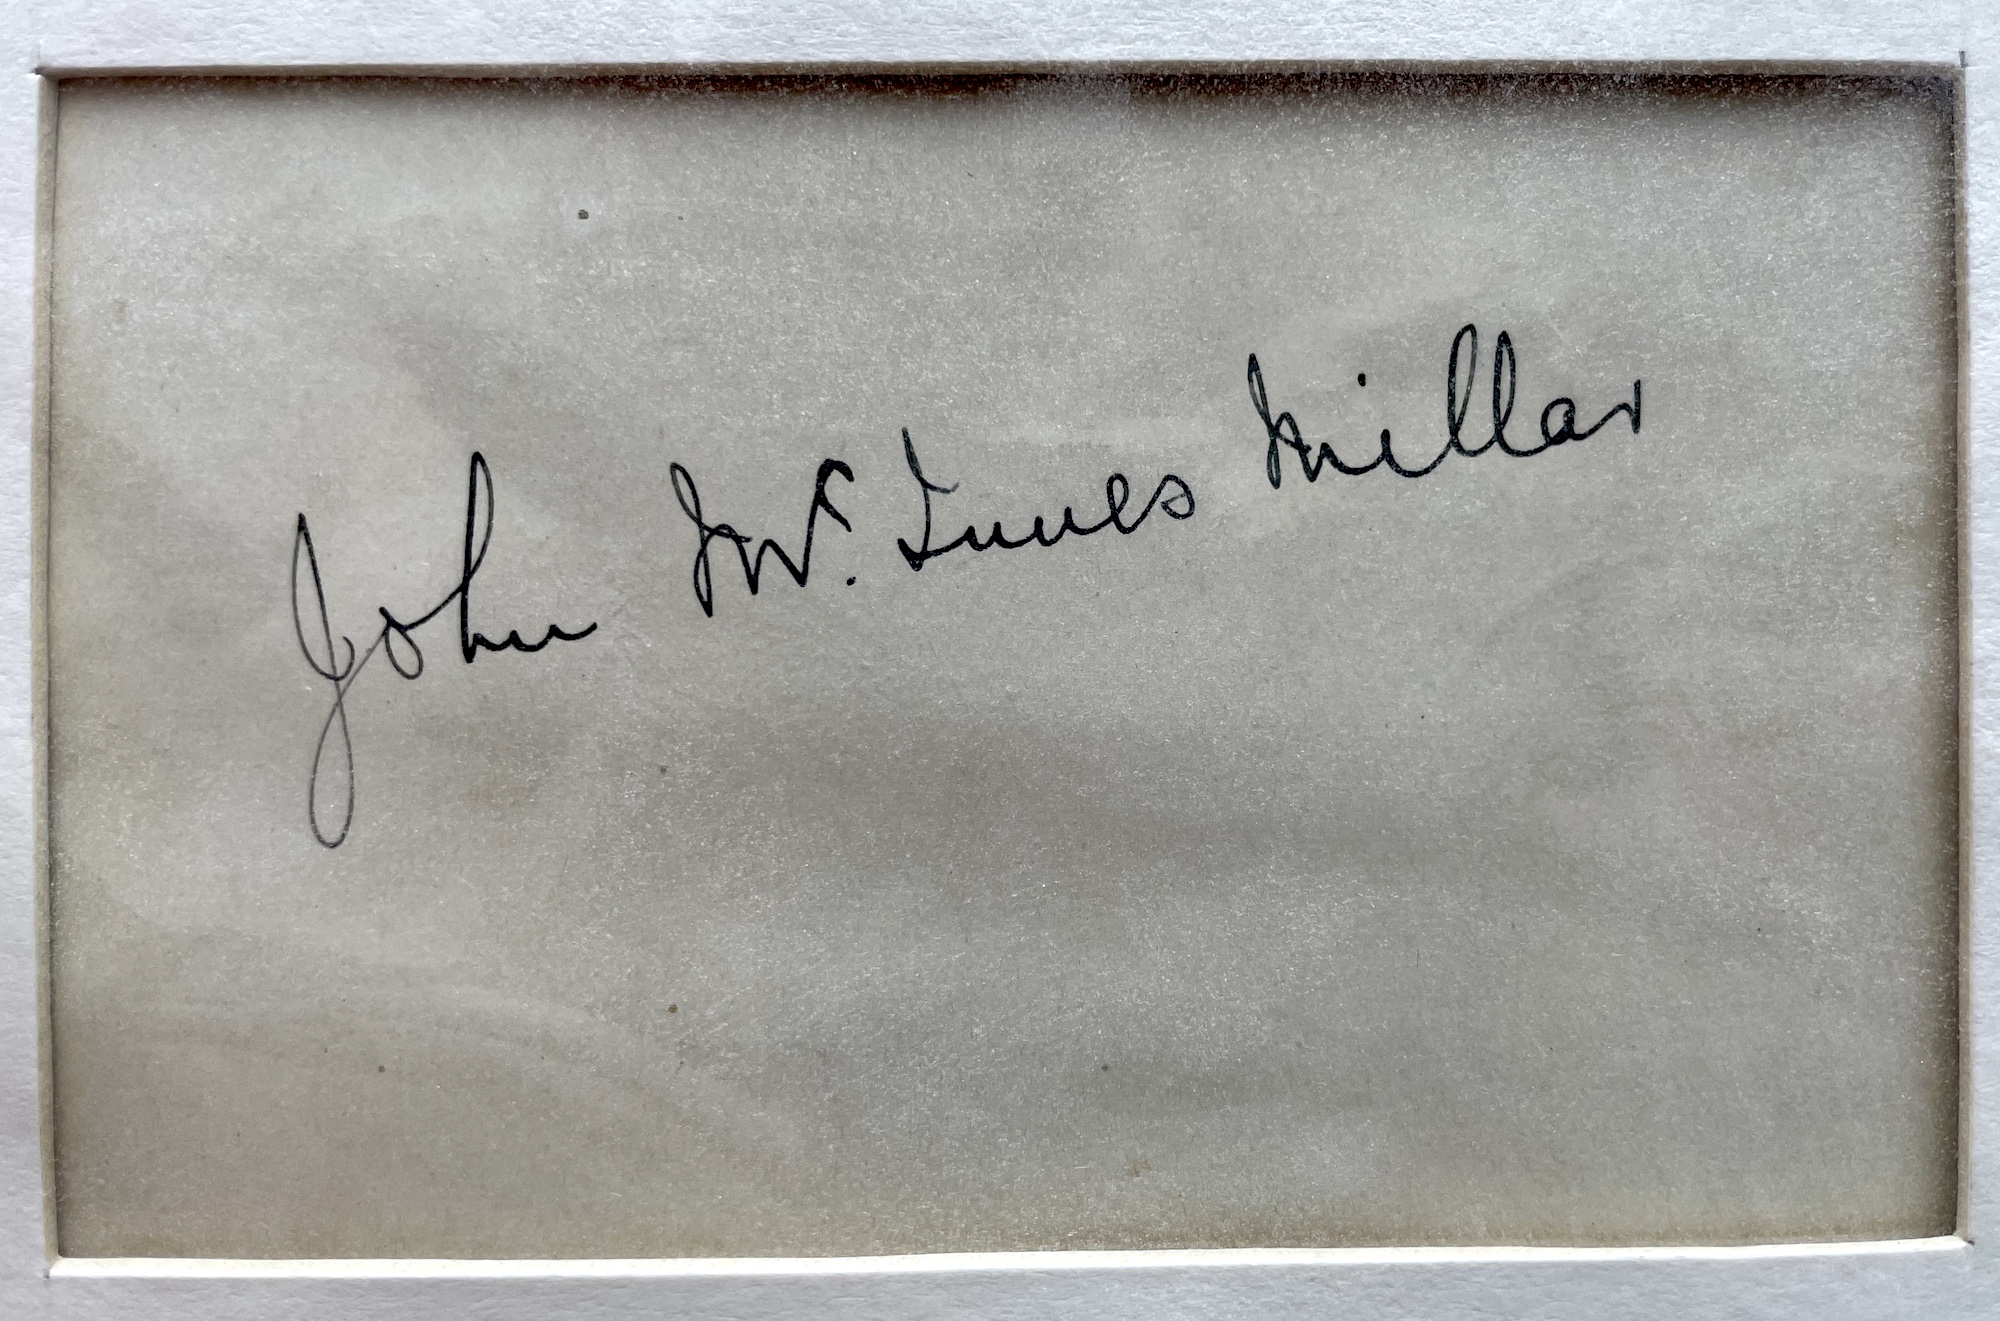 Signature of John McInnnes Millar